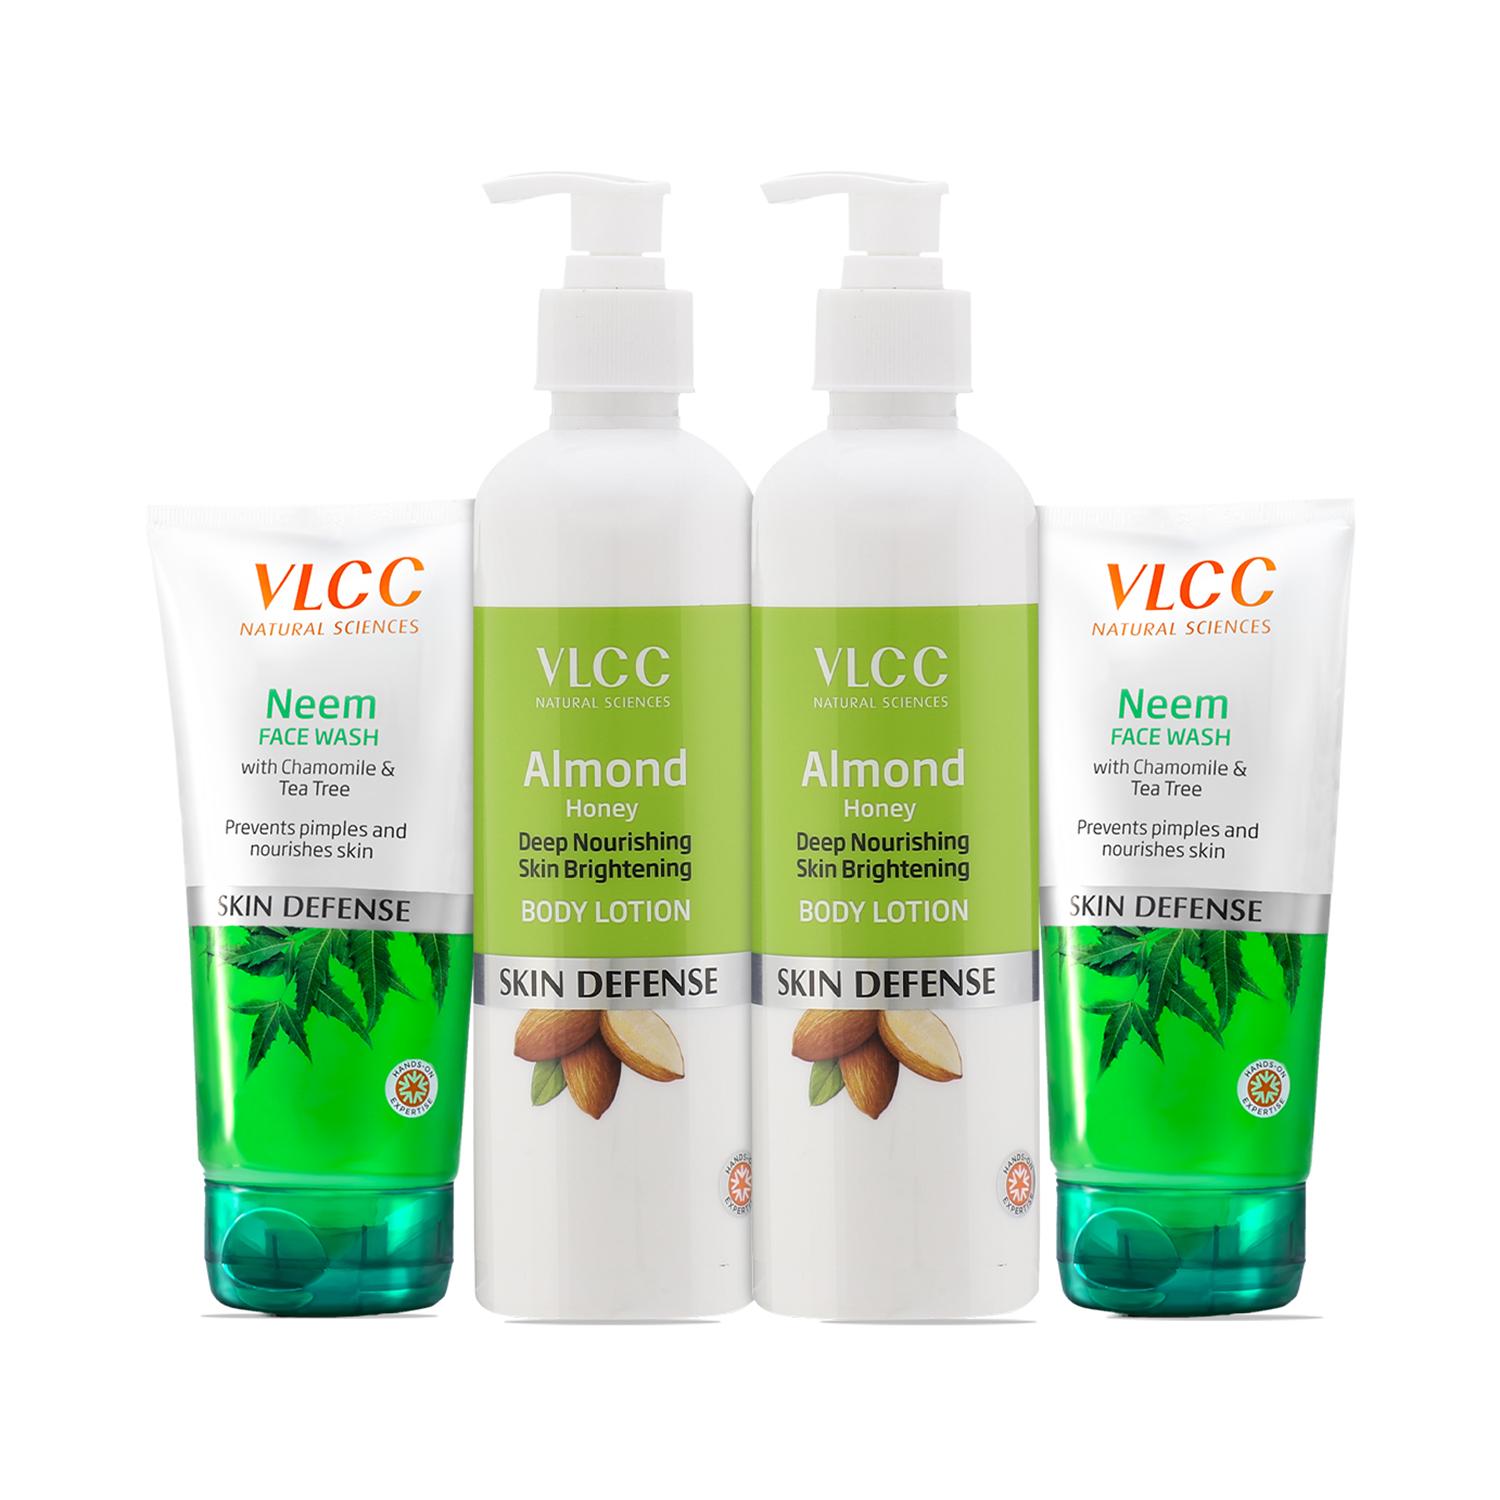 VLCC | VLCC Neem Face Wash & Almond Honey Skin Brightening Body Lotion Combo